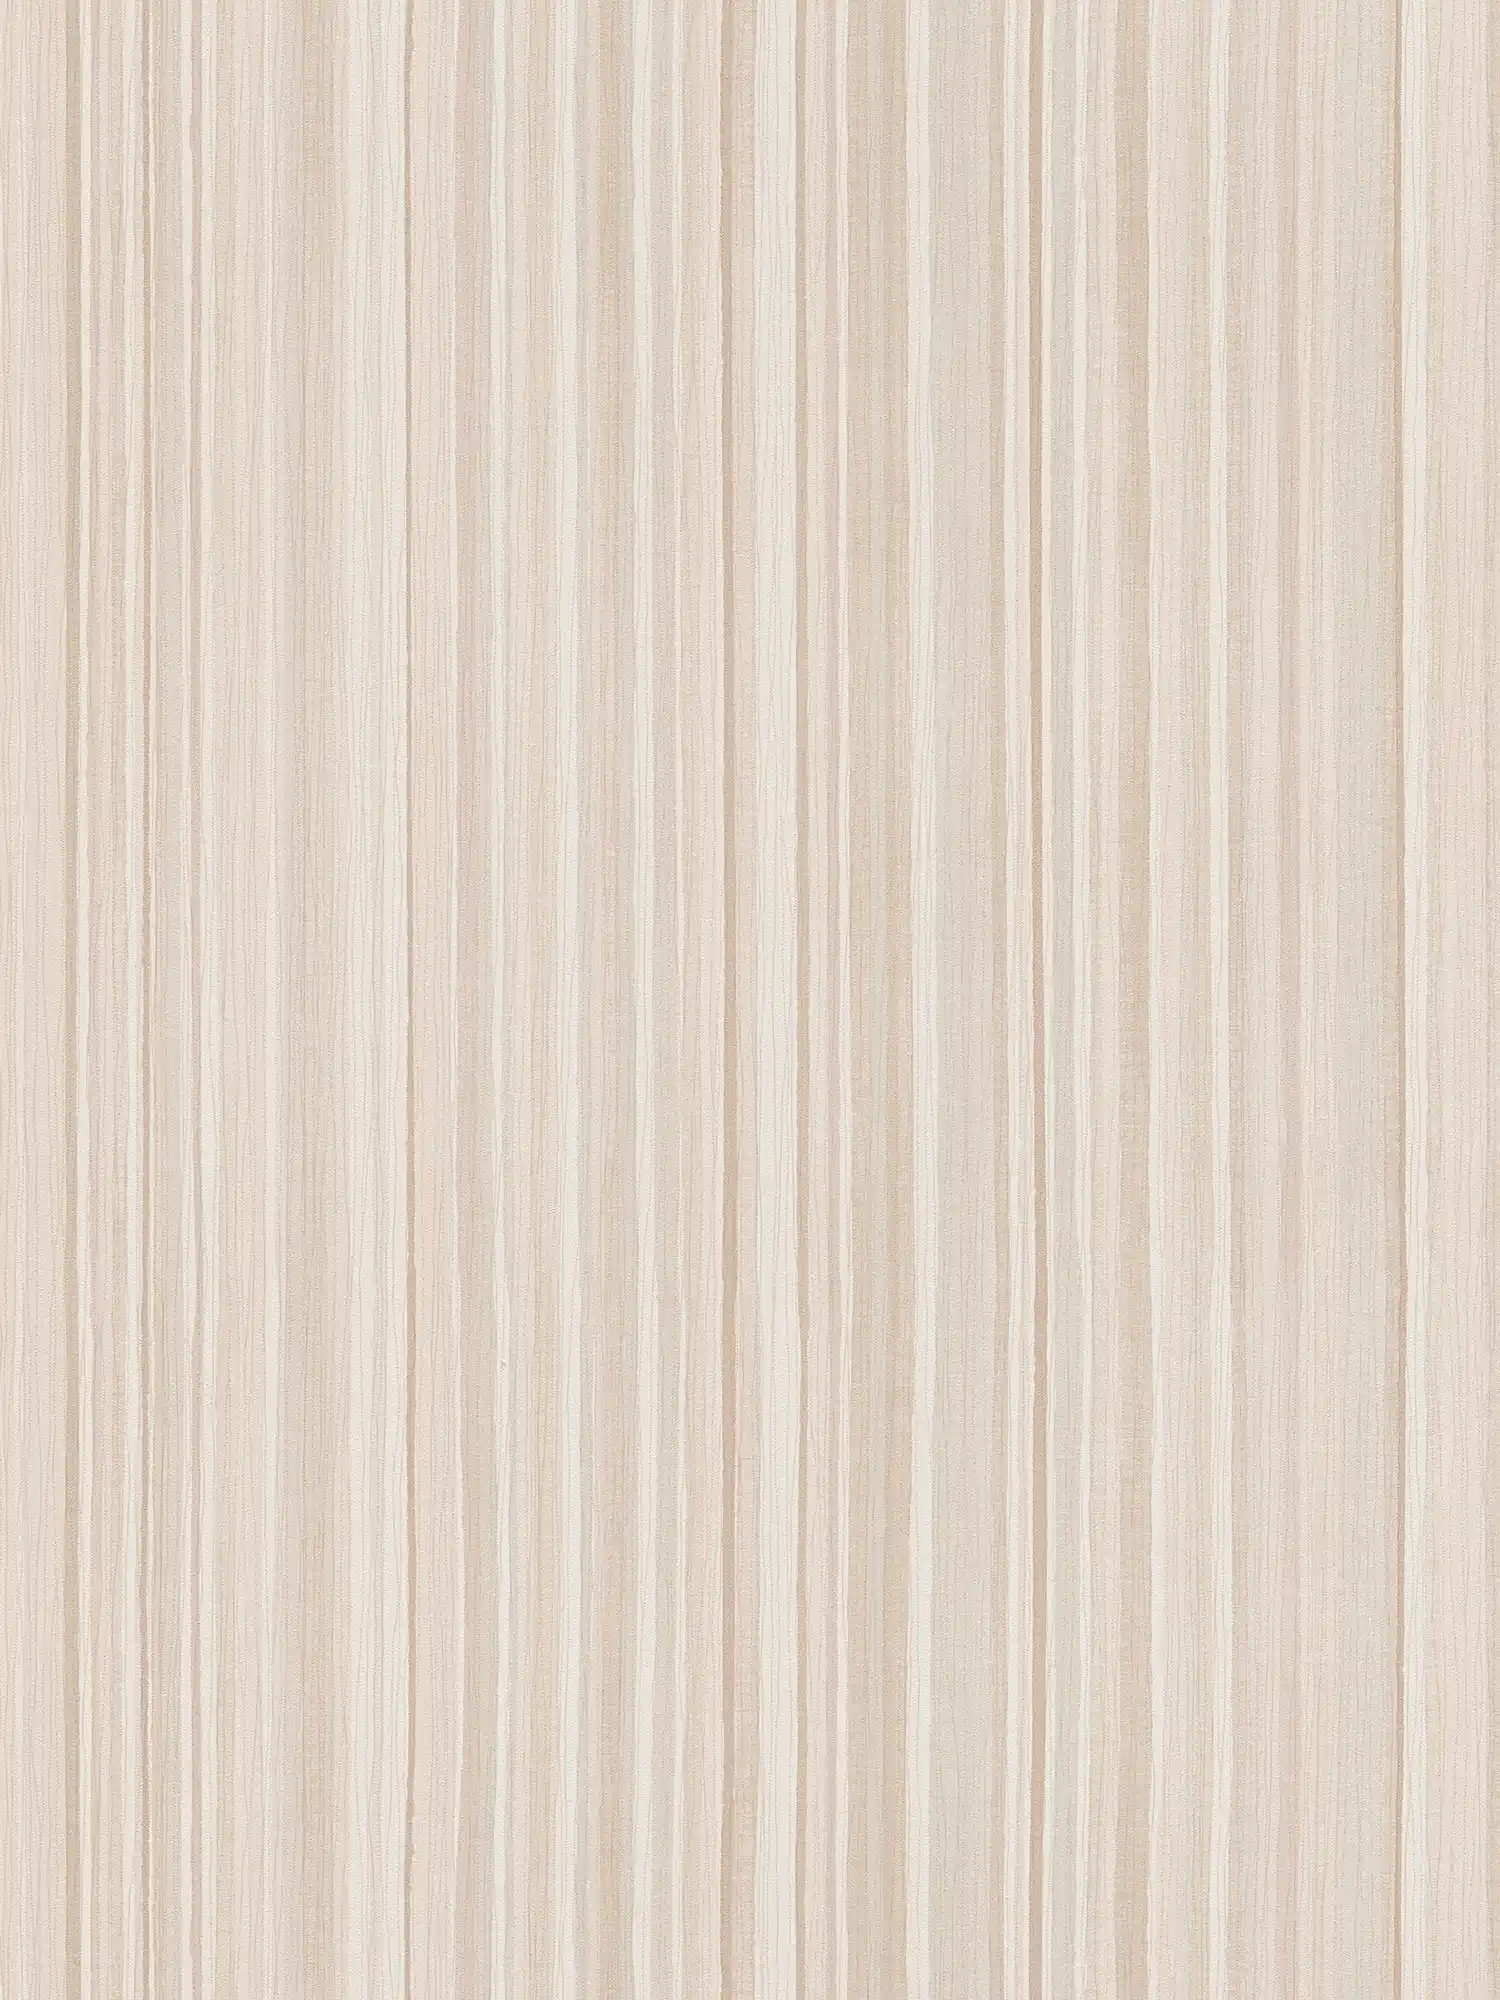 Gestreept behang met smal lijnenpatroon - beige
